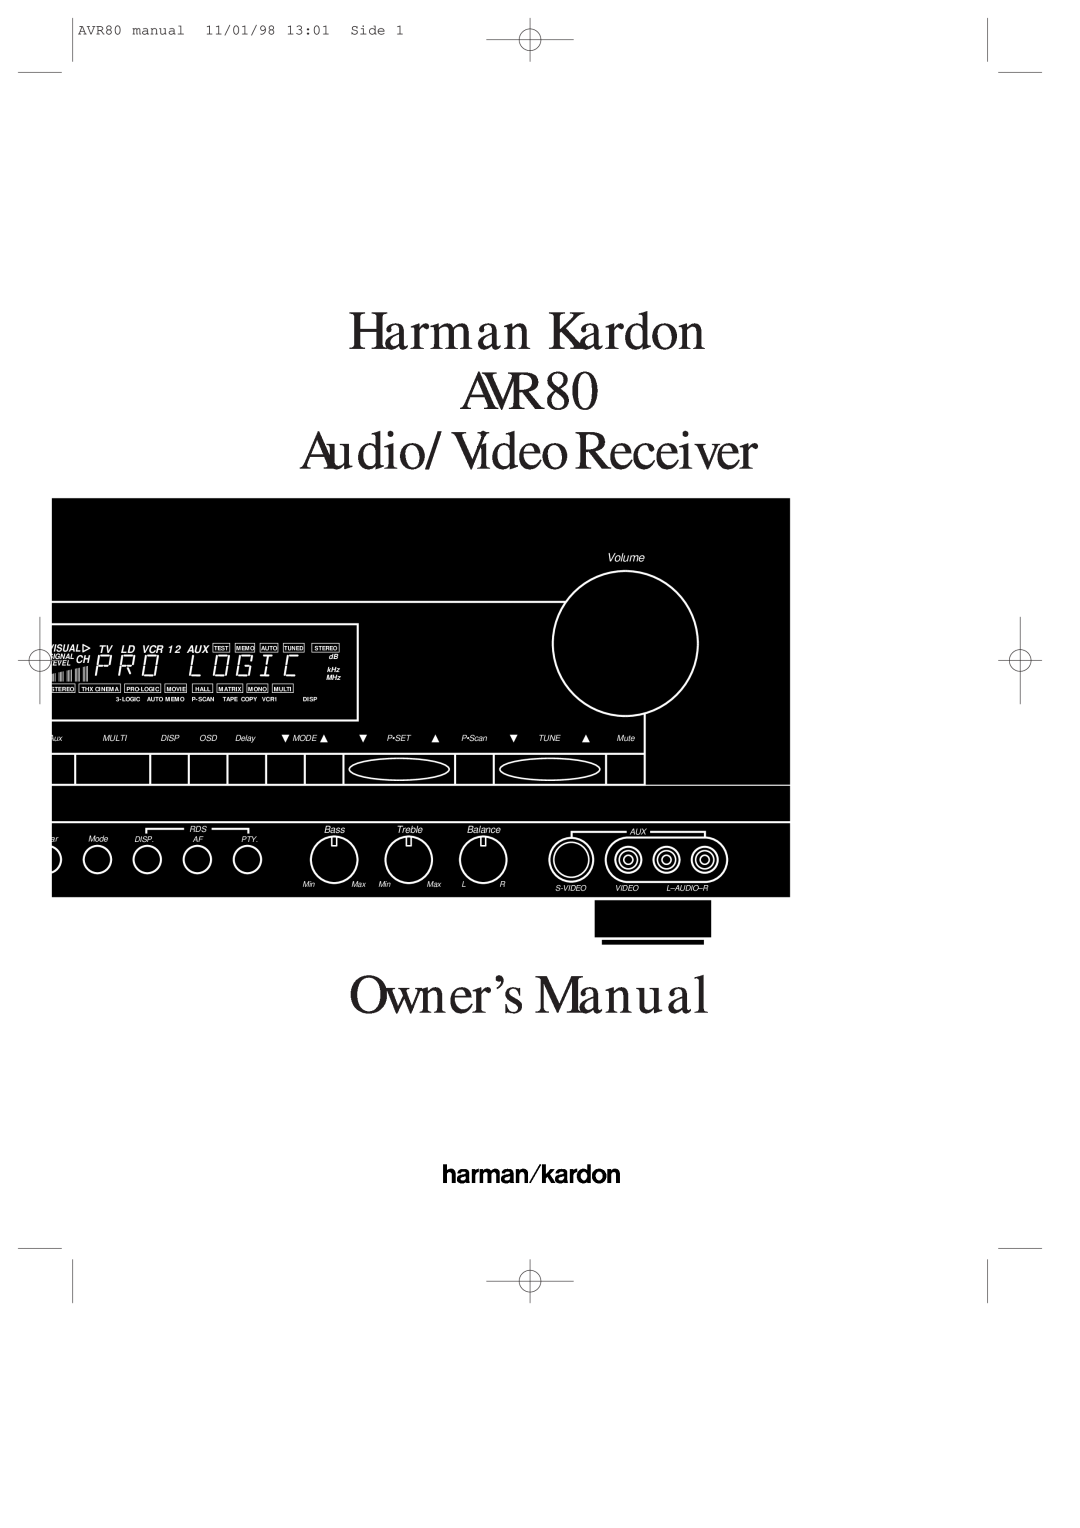 Harman-Kardon owner manual Harman Kardon AVR80 Audio/VideoReceiver, AVR80 manual 11/01/98 13 01 Side, Volume, Bass 